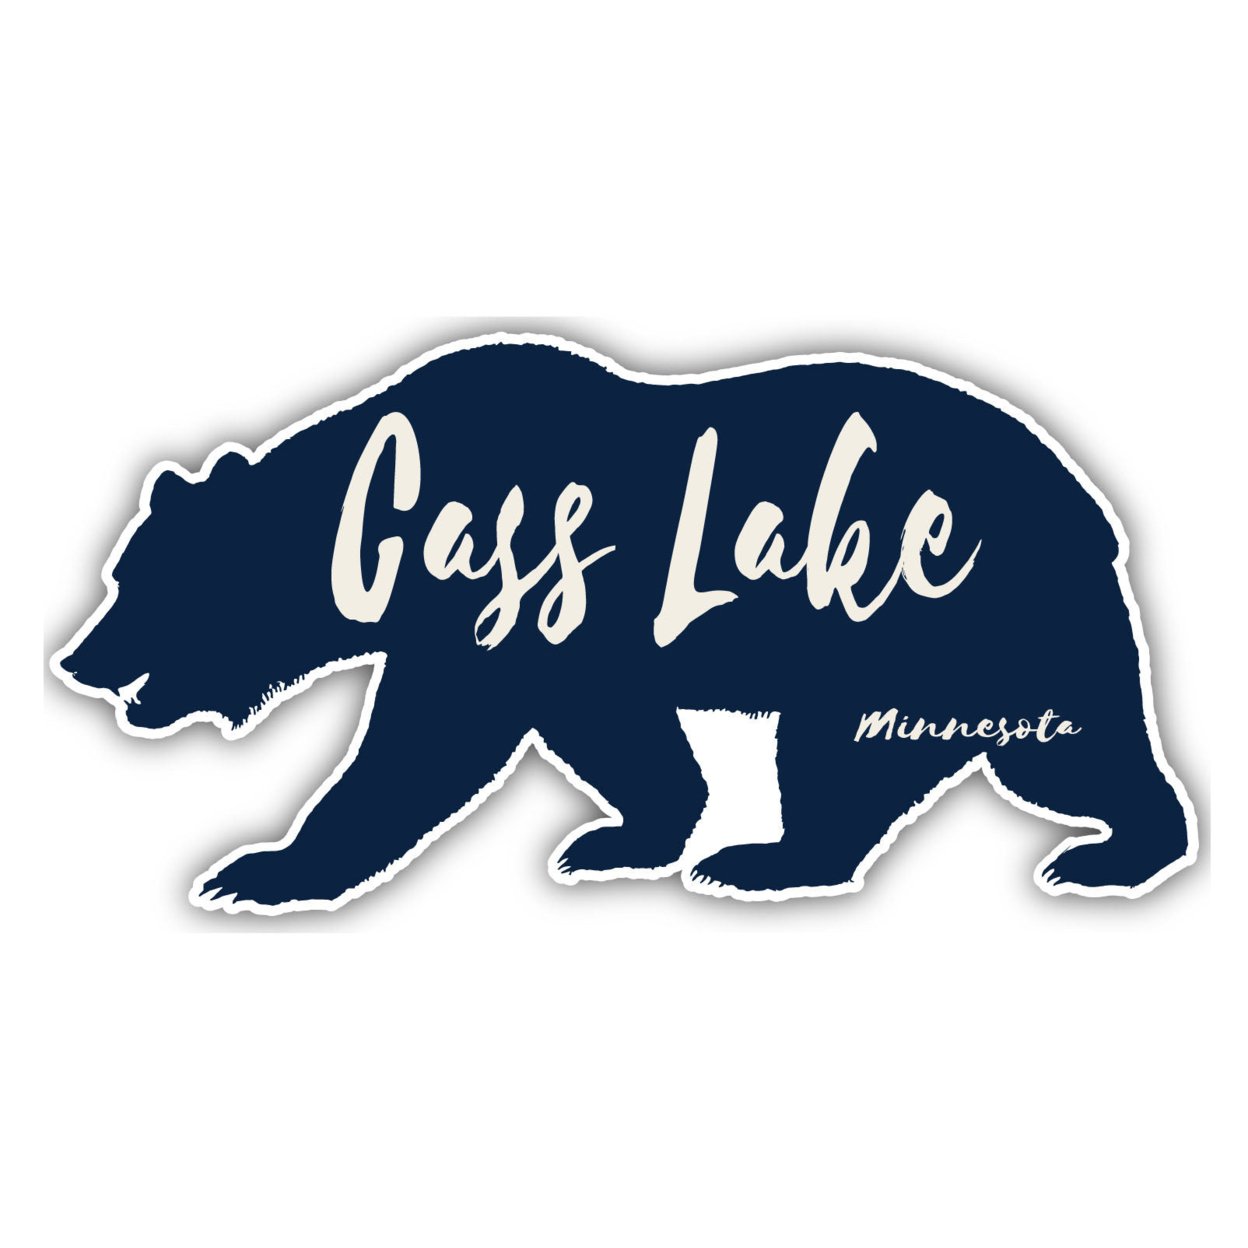 Cass Lake Minnesota Souvenir Decorative Stickers (Choose Theme And Size) - 4-Pack, 8-Inch, Bear